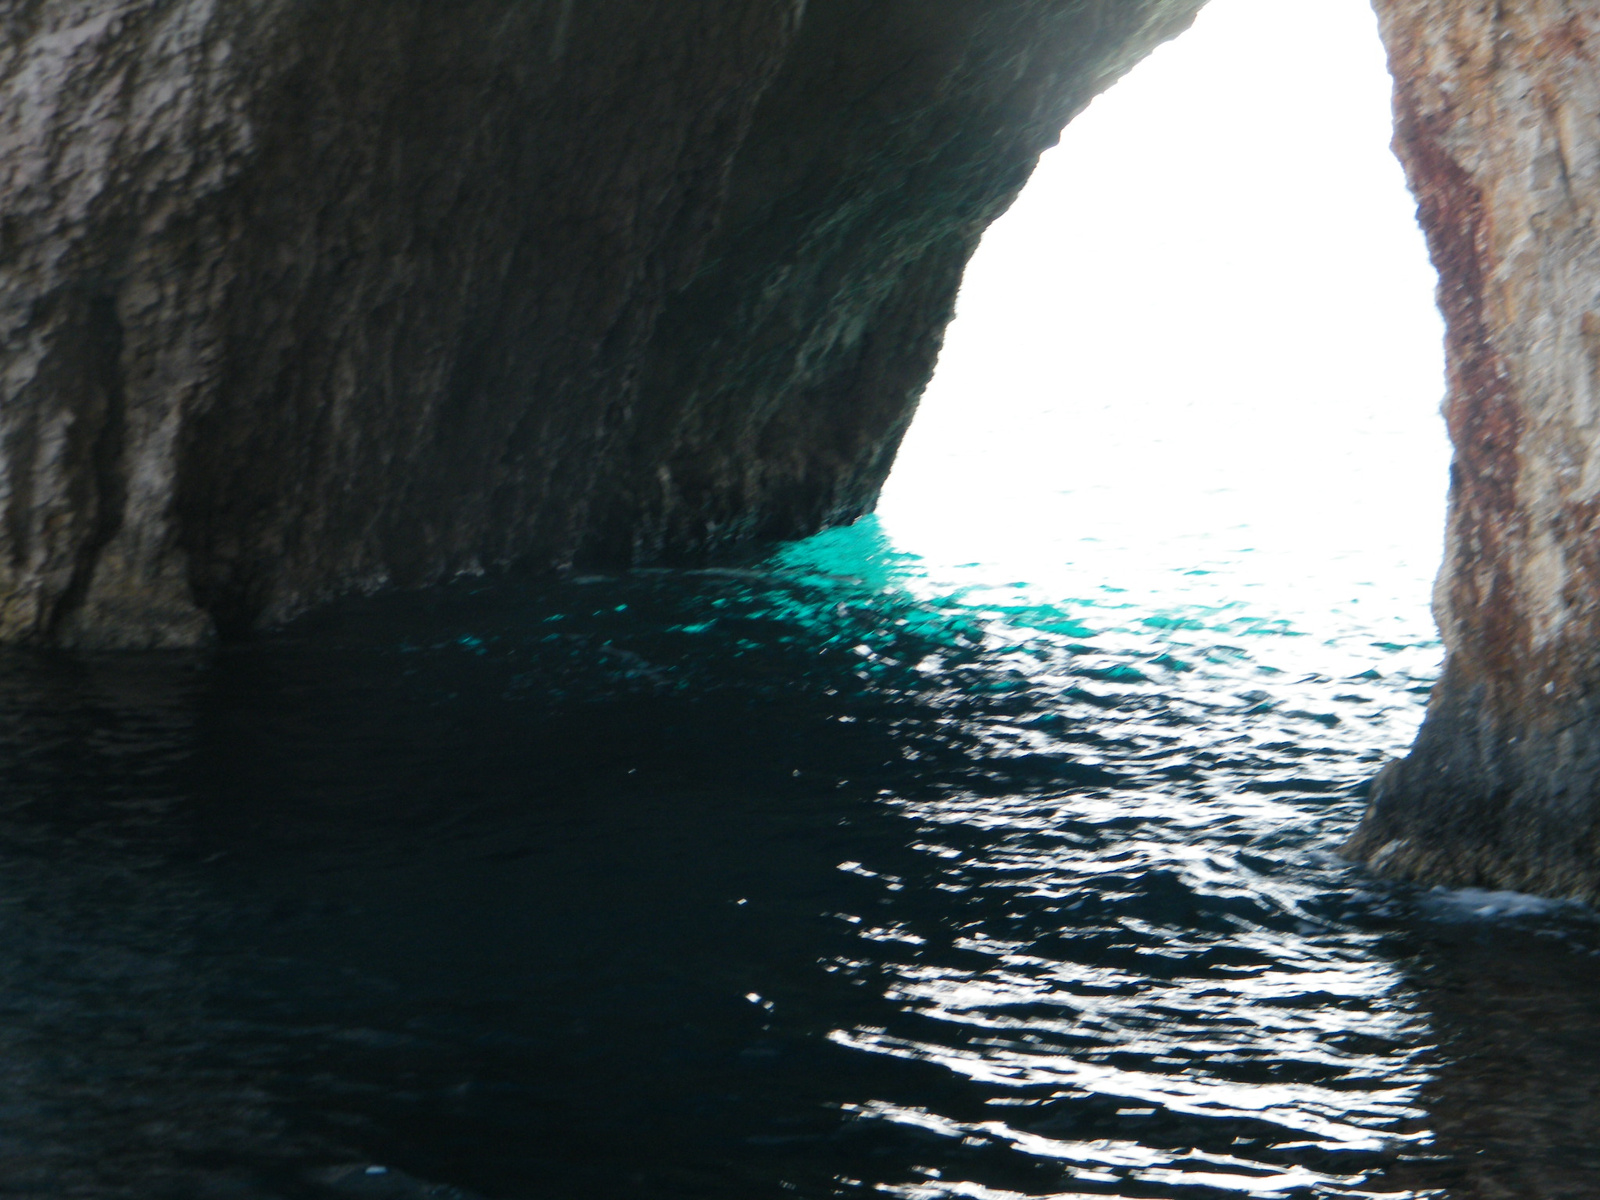 Zakynthos, Blue Caves